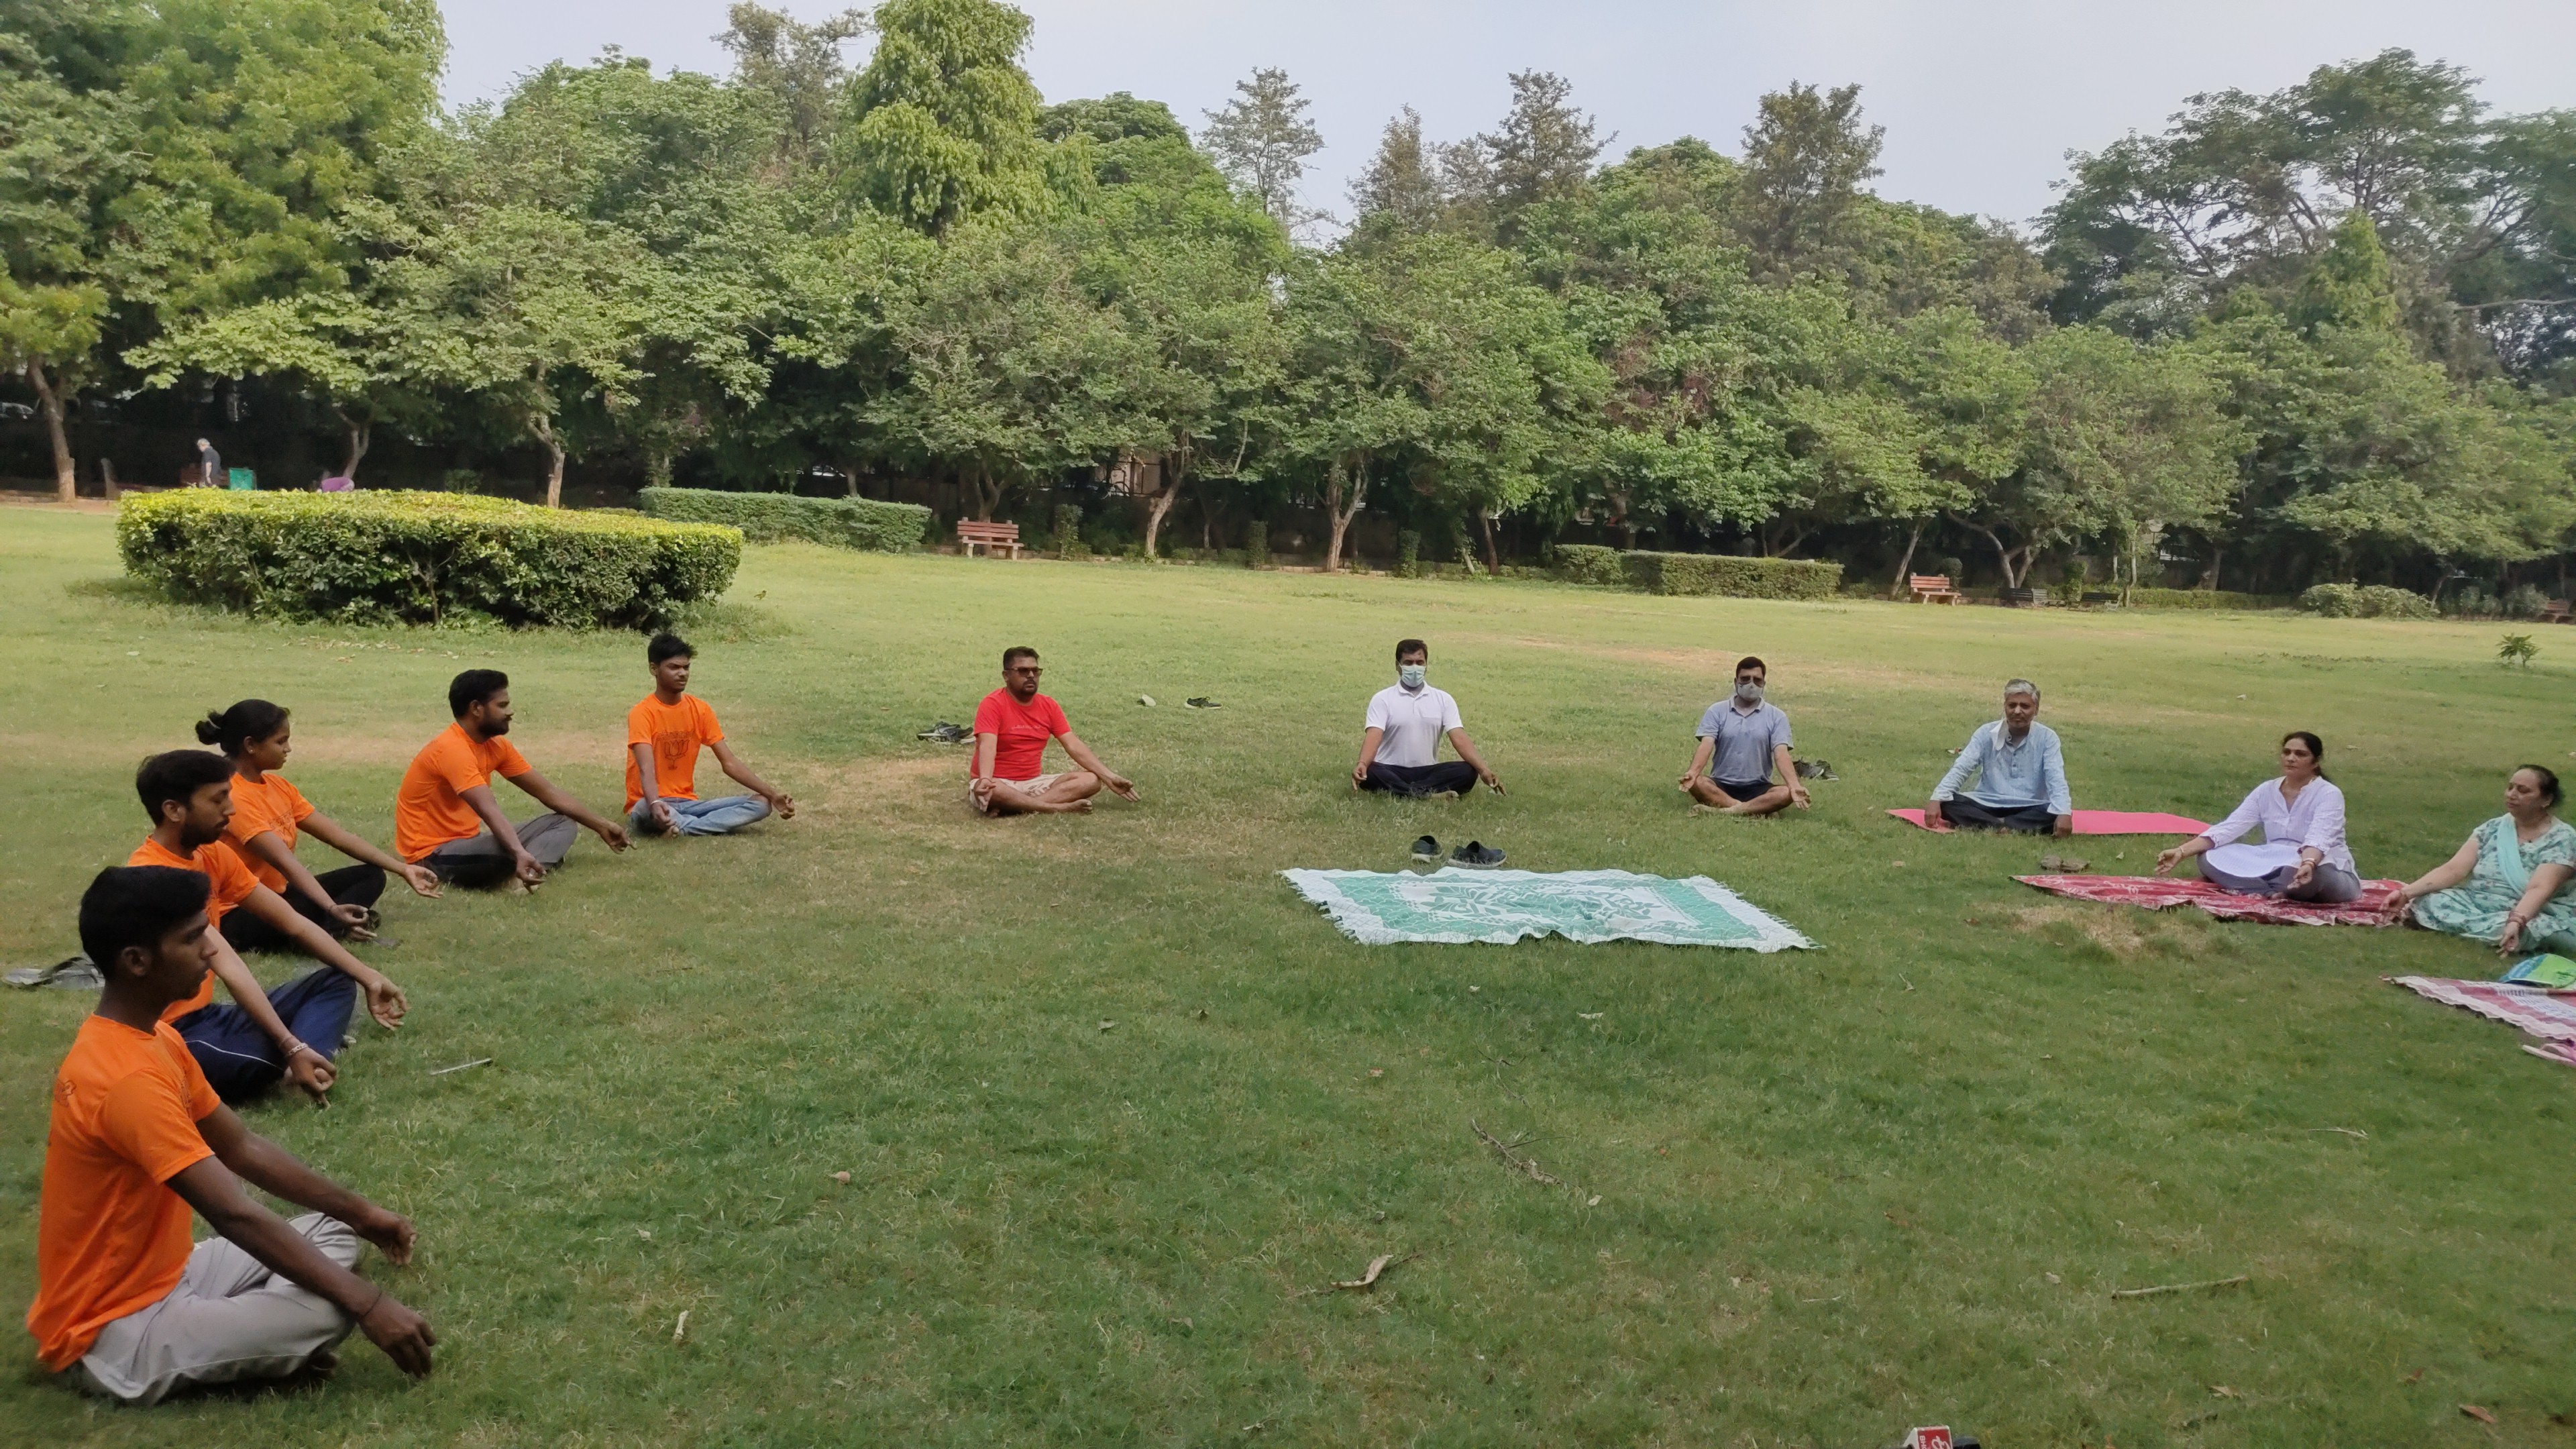 7th international-yoga-day celebration in delhi